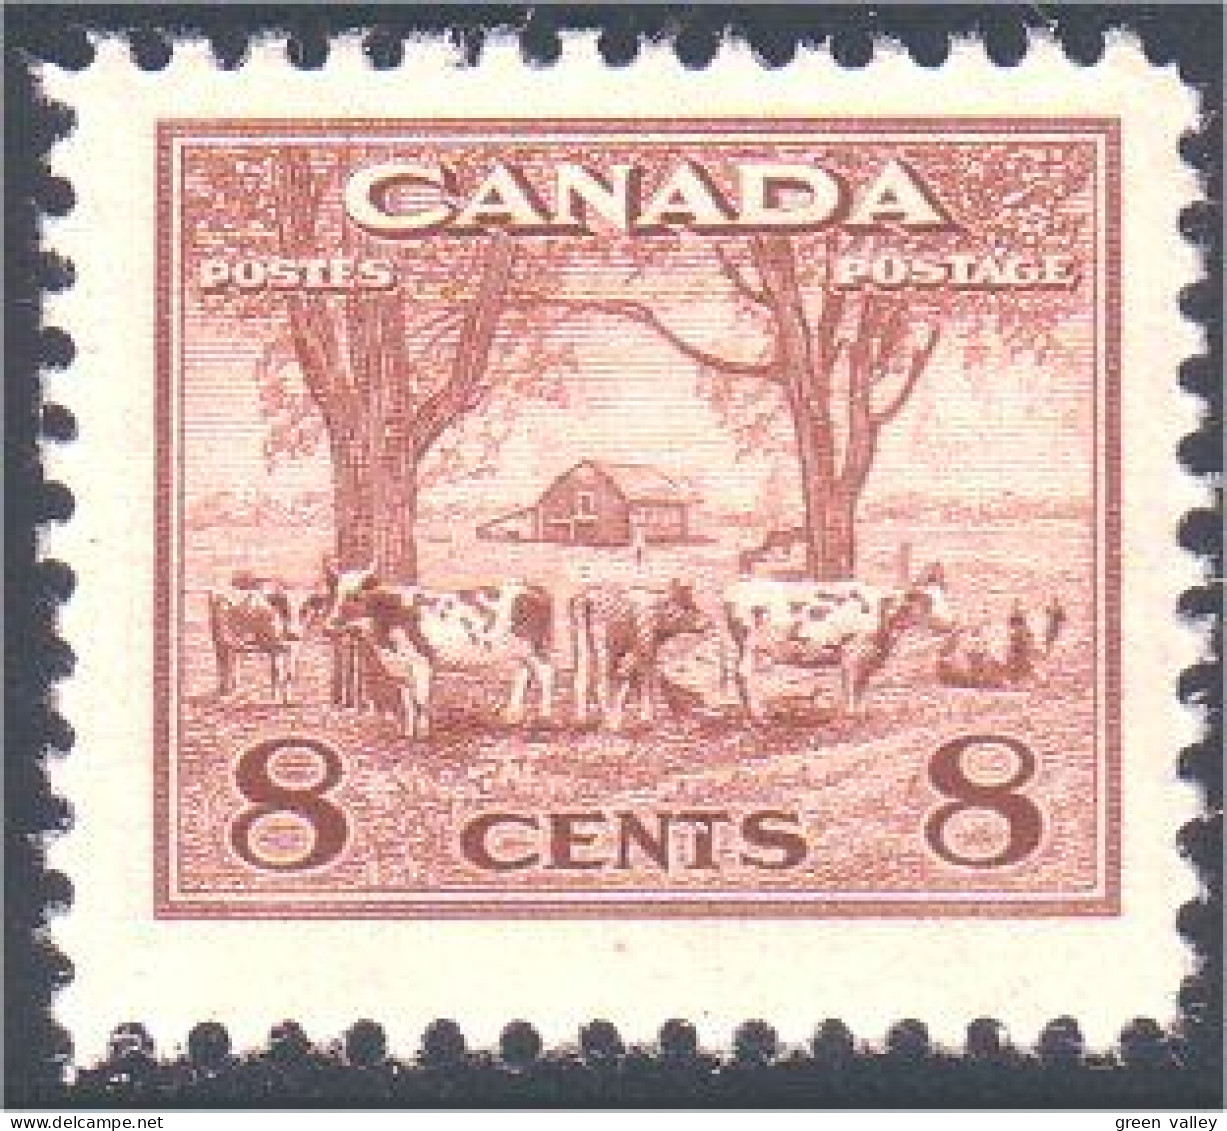 951 Canada 1942 War Issue Farm Scene Ferme Vache Cow Bull Vaca Kuh Vacca MNH ** Neuf SC (127) - Agriculture